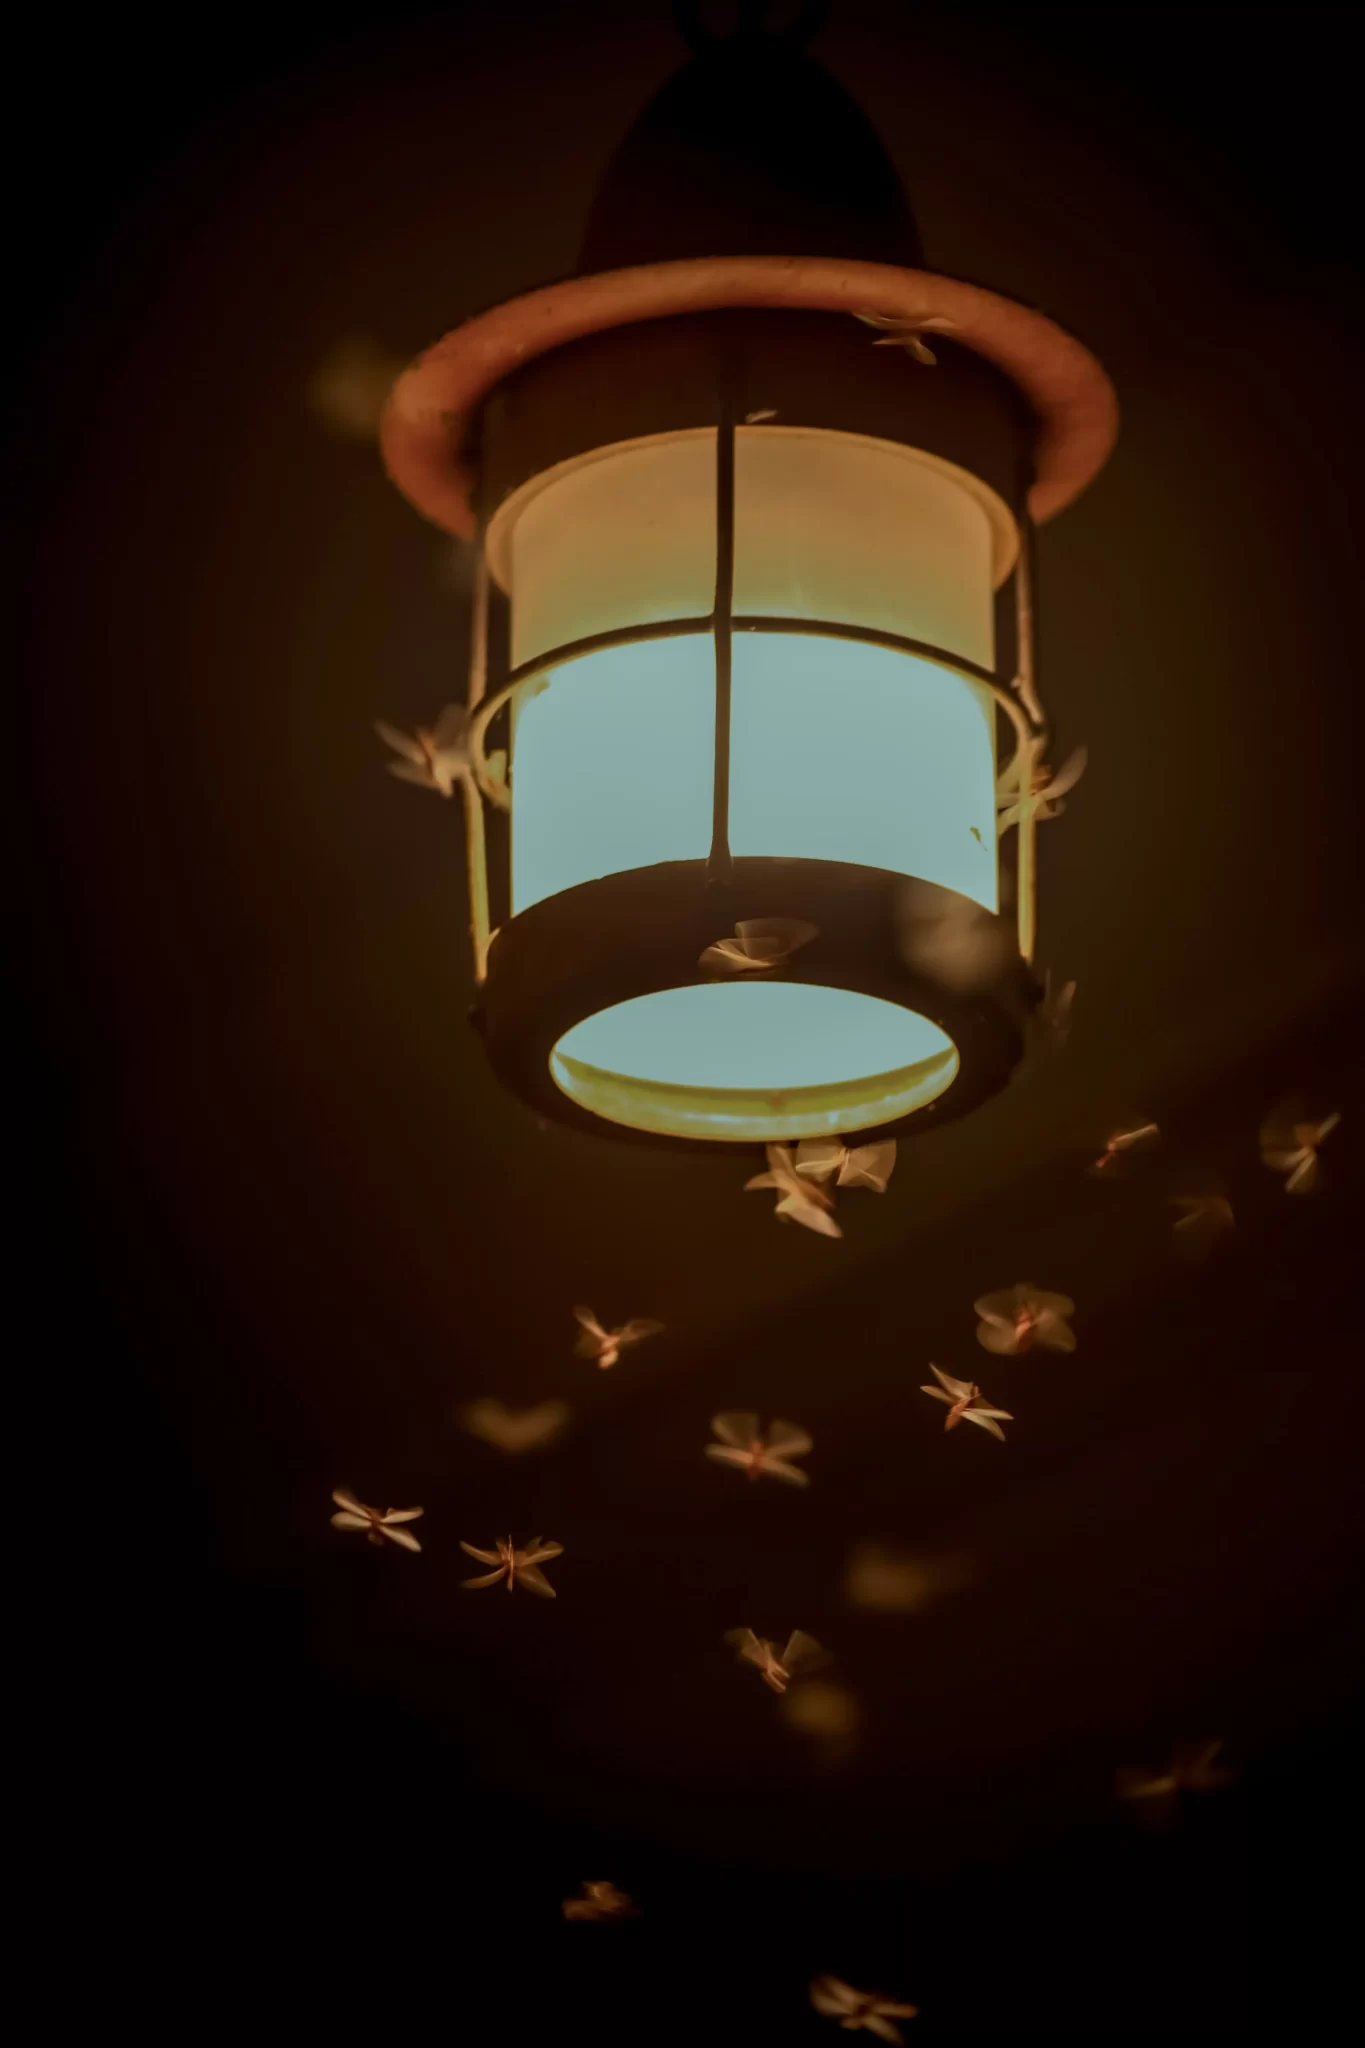 Bugs around camping light at night